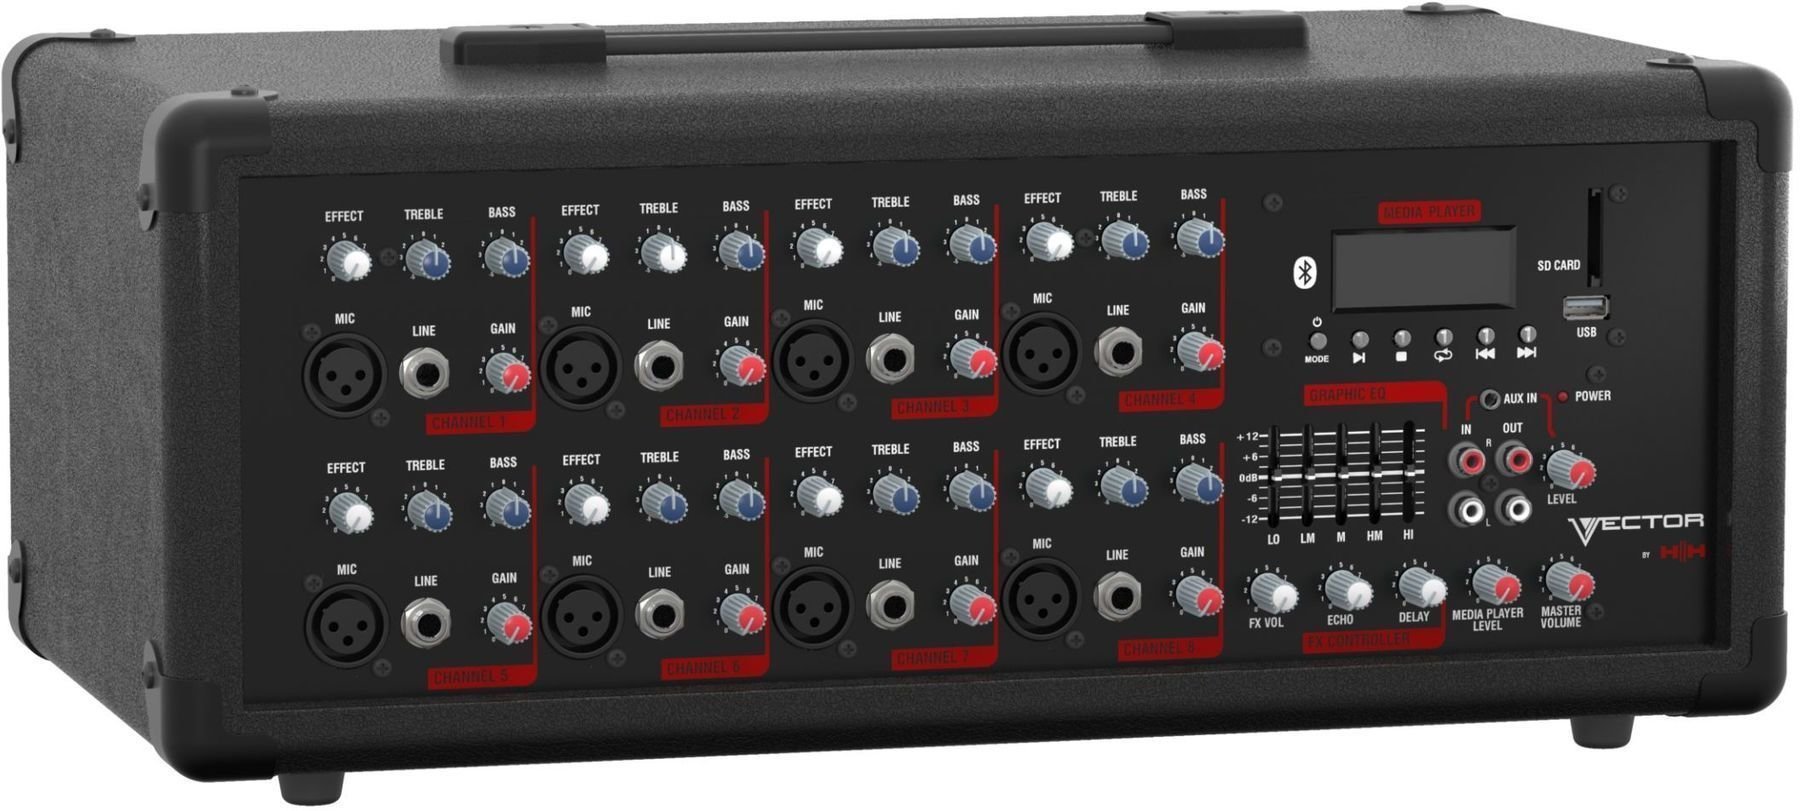 Power Mixer HH Electronics VRH-600 Power Mixer